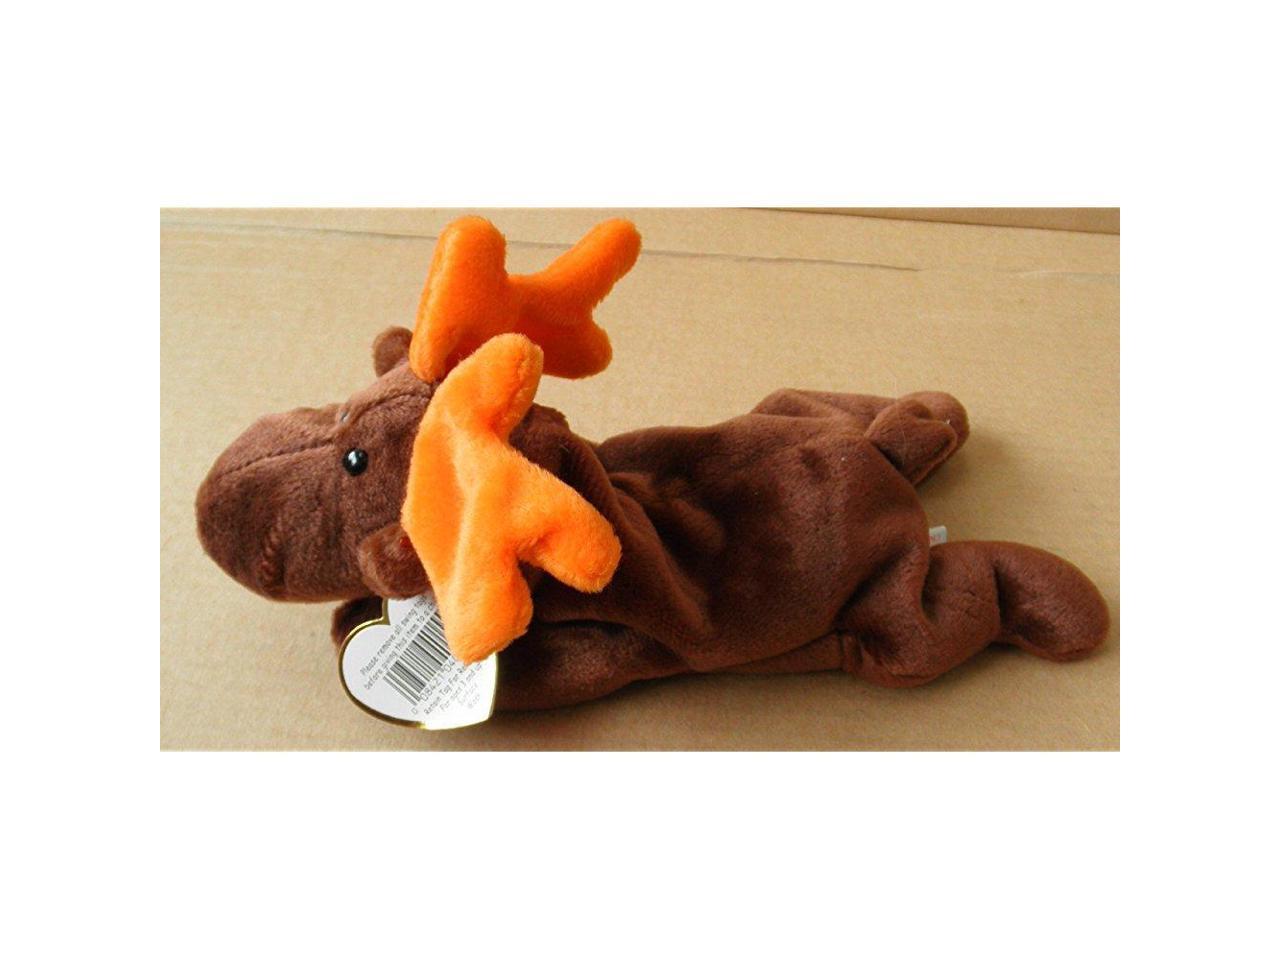 chocolate moose stuffed animal